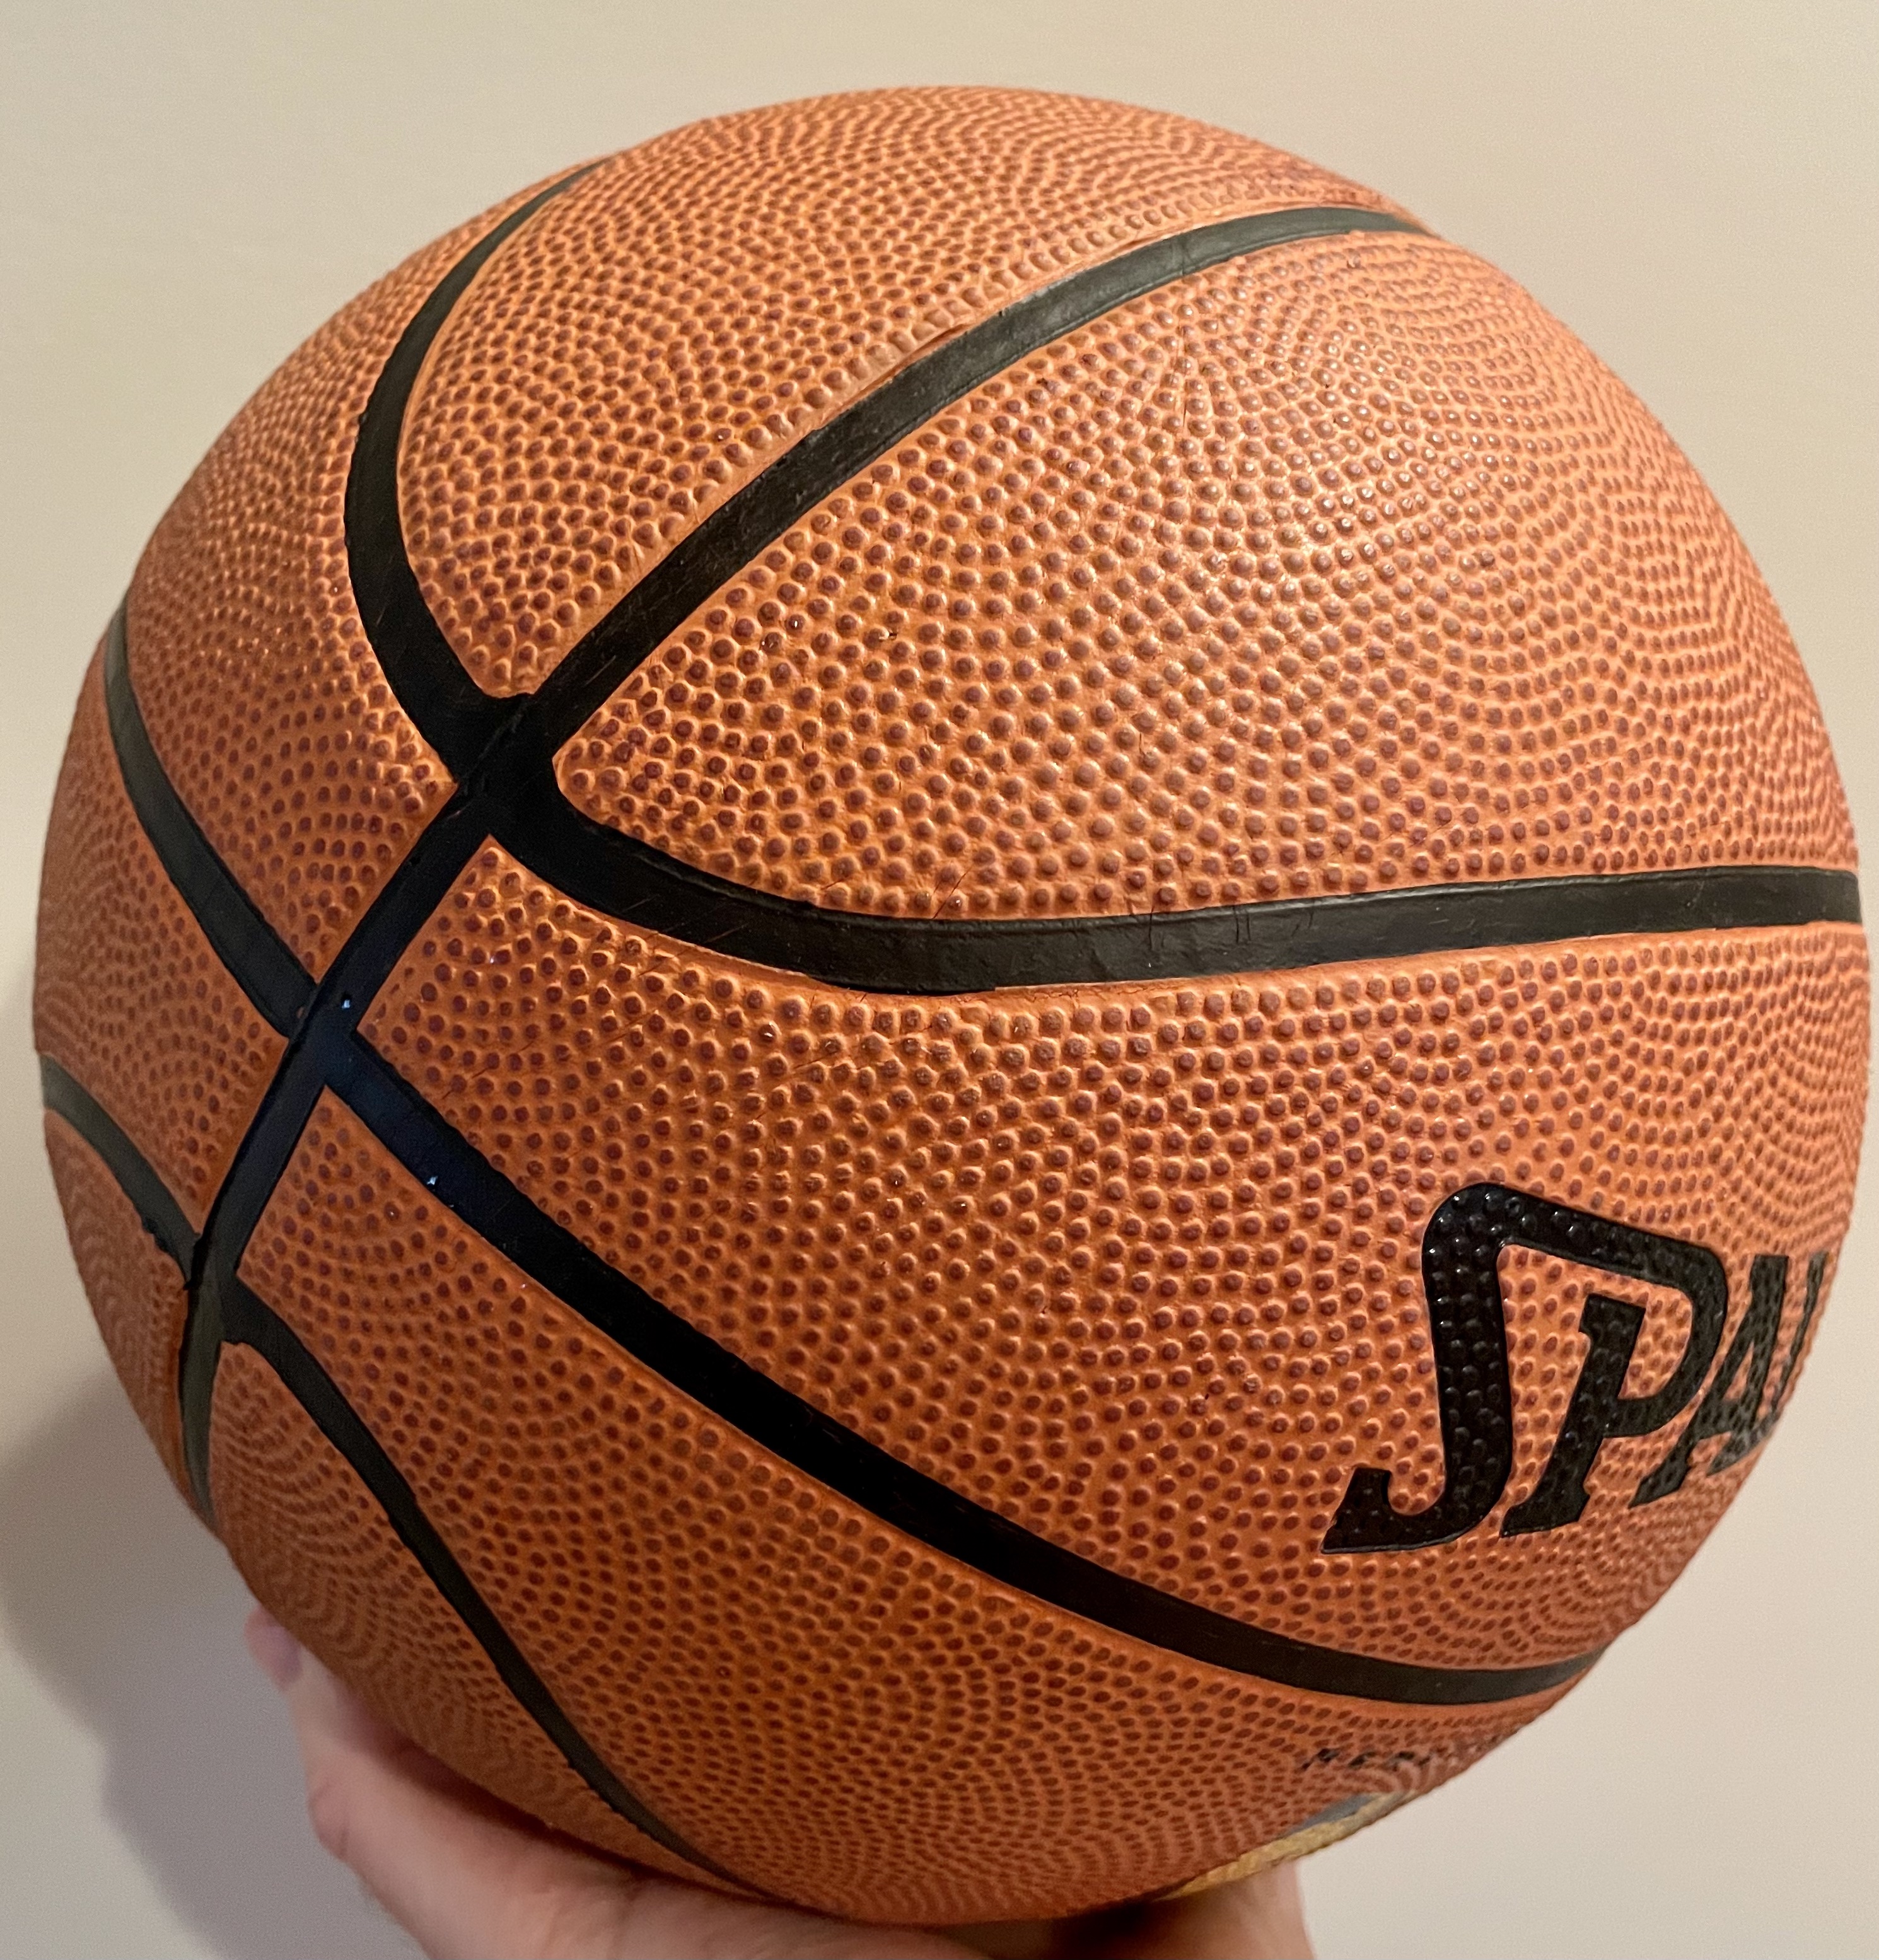 MUNDANE MYSTERIES: Why are most basketballs orange?